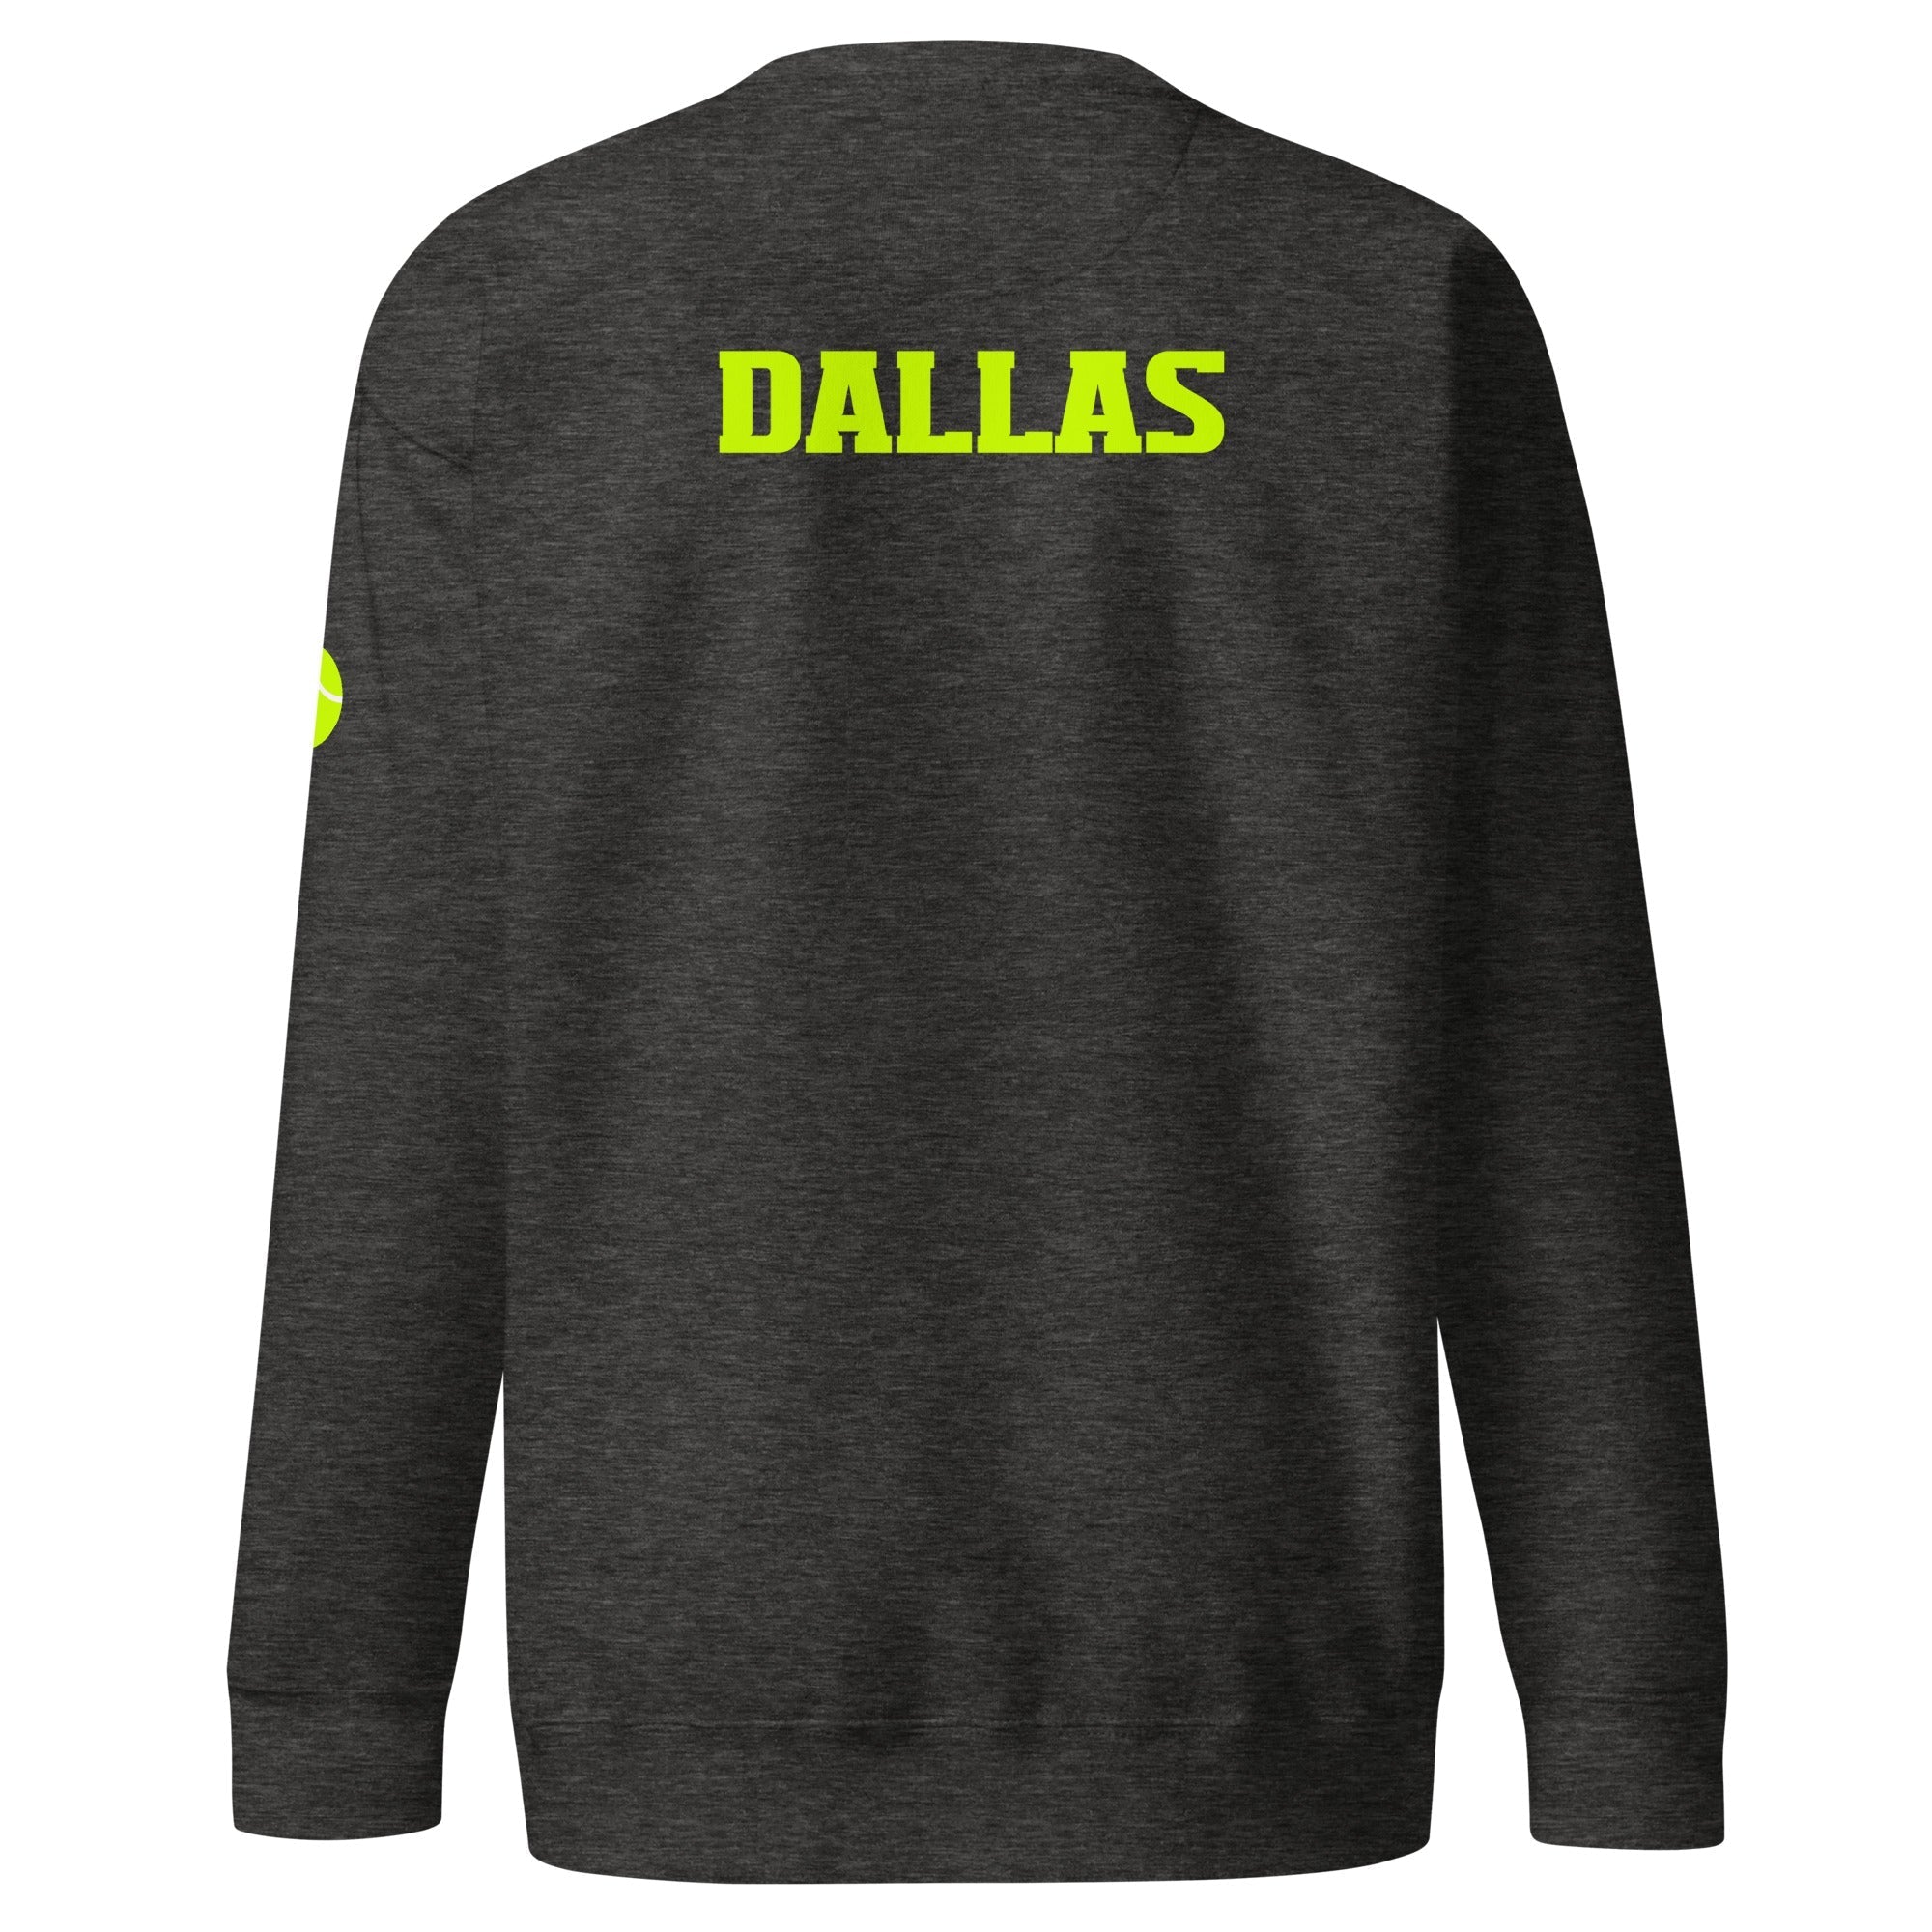 Unisex Premium Sweatshirt - Tennis Masters Dallas - GRAPHIC T-SHIRTS